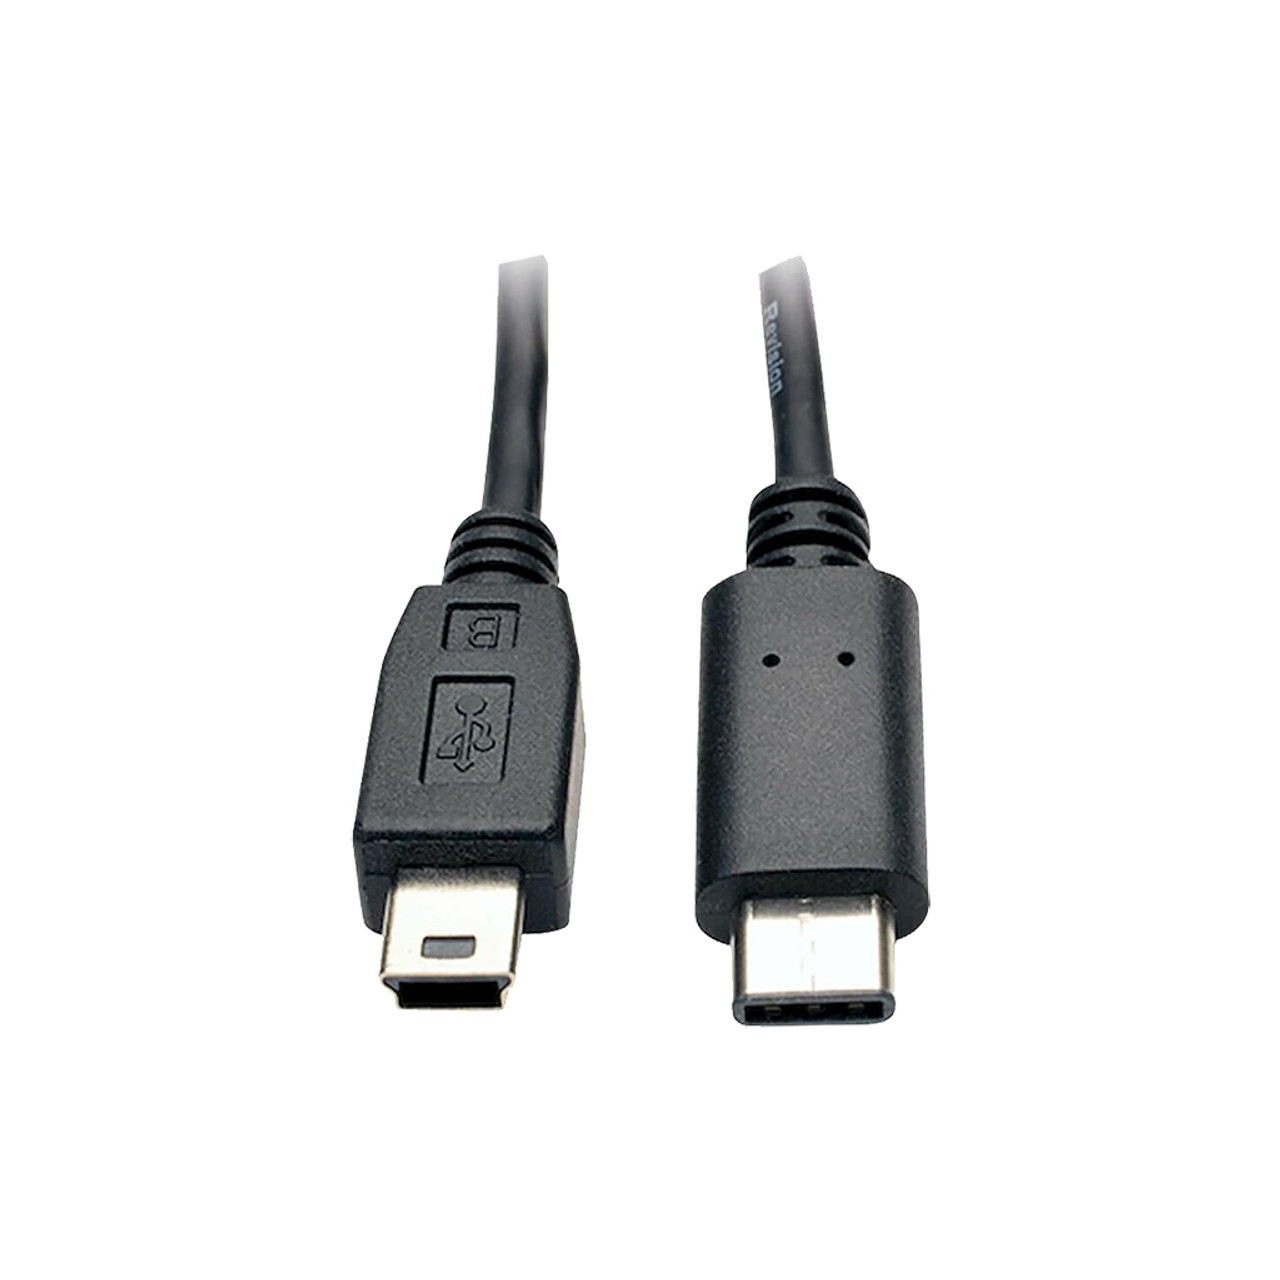 Mini USB-C to Micro USB Adapter